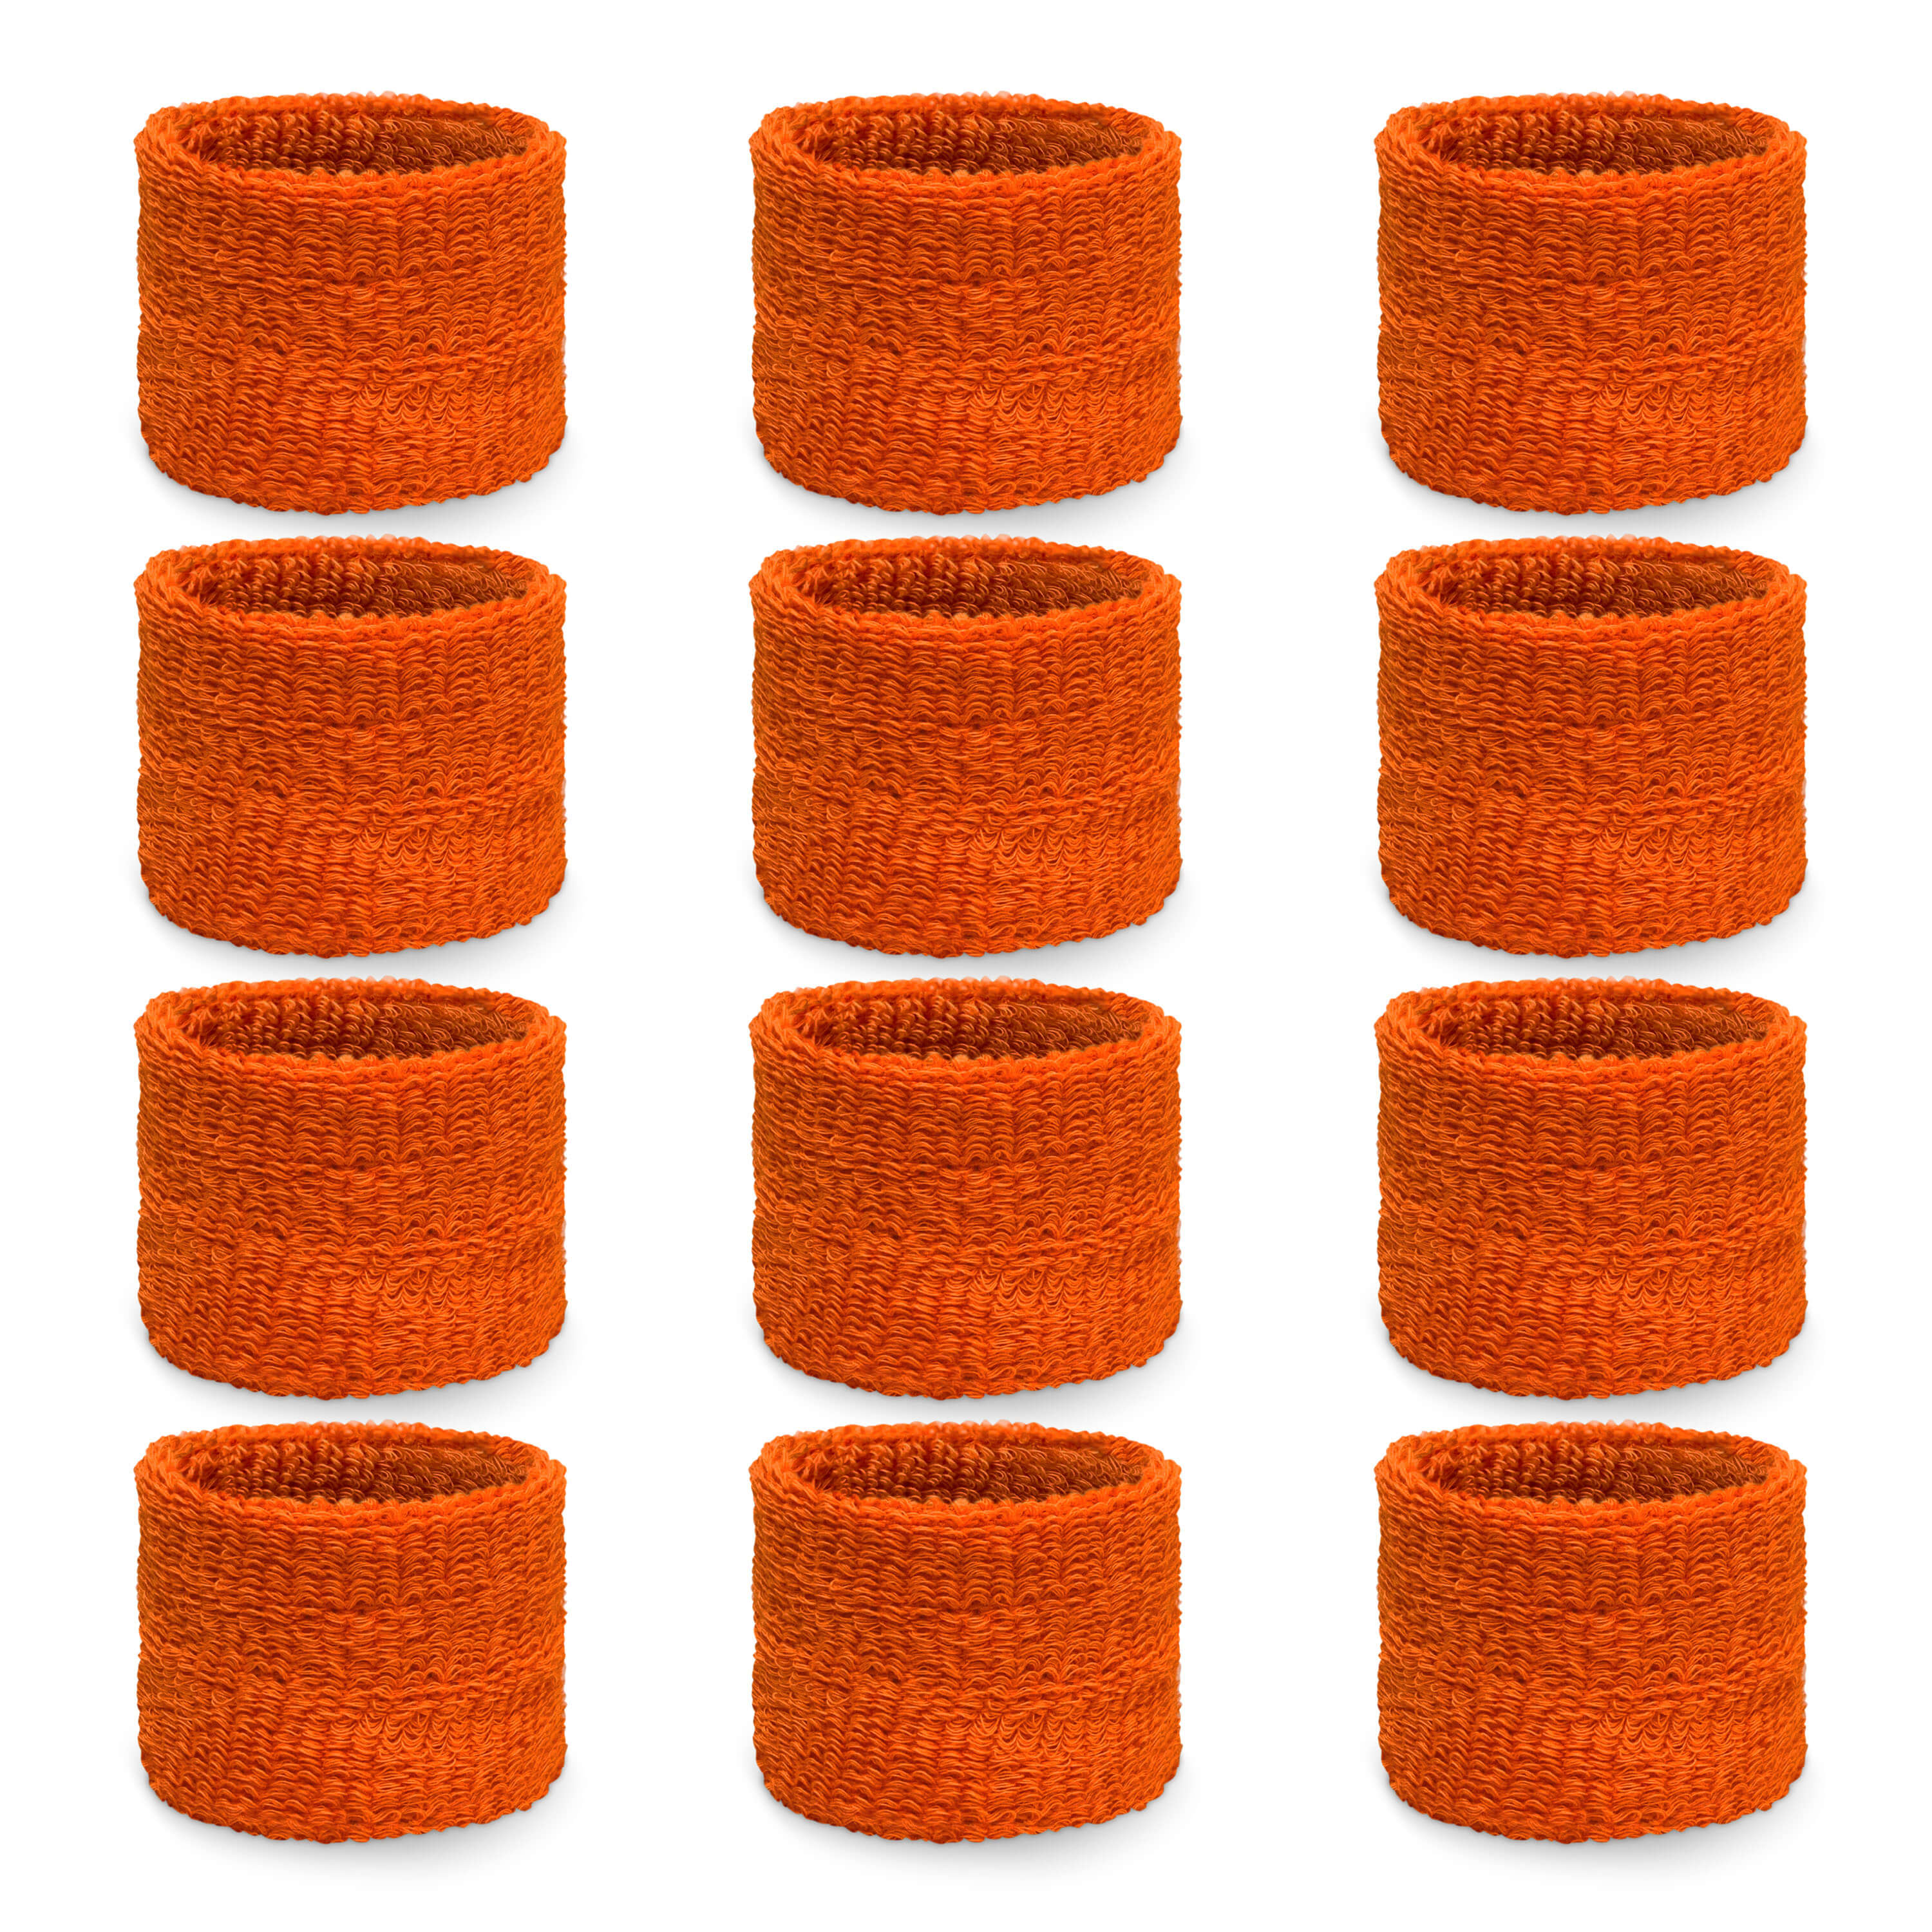 Dark Orange Cheap Wristbands Wholesale for School Church 6PRs